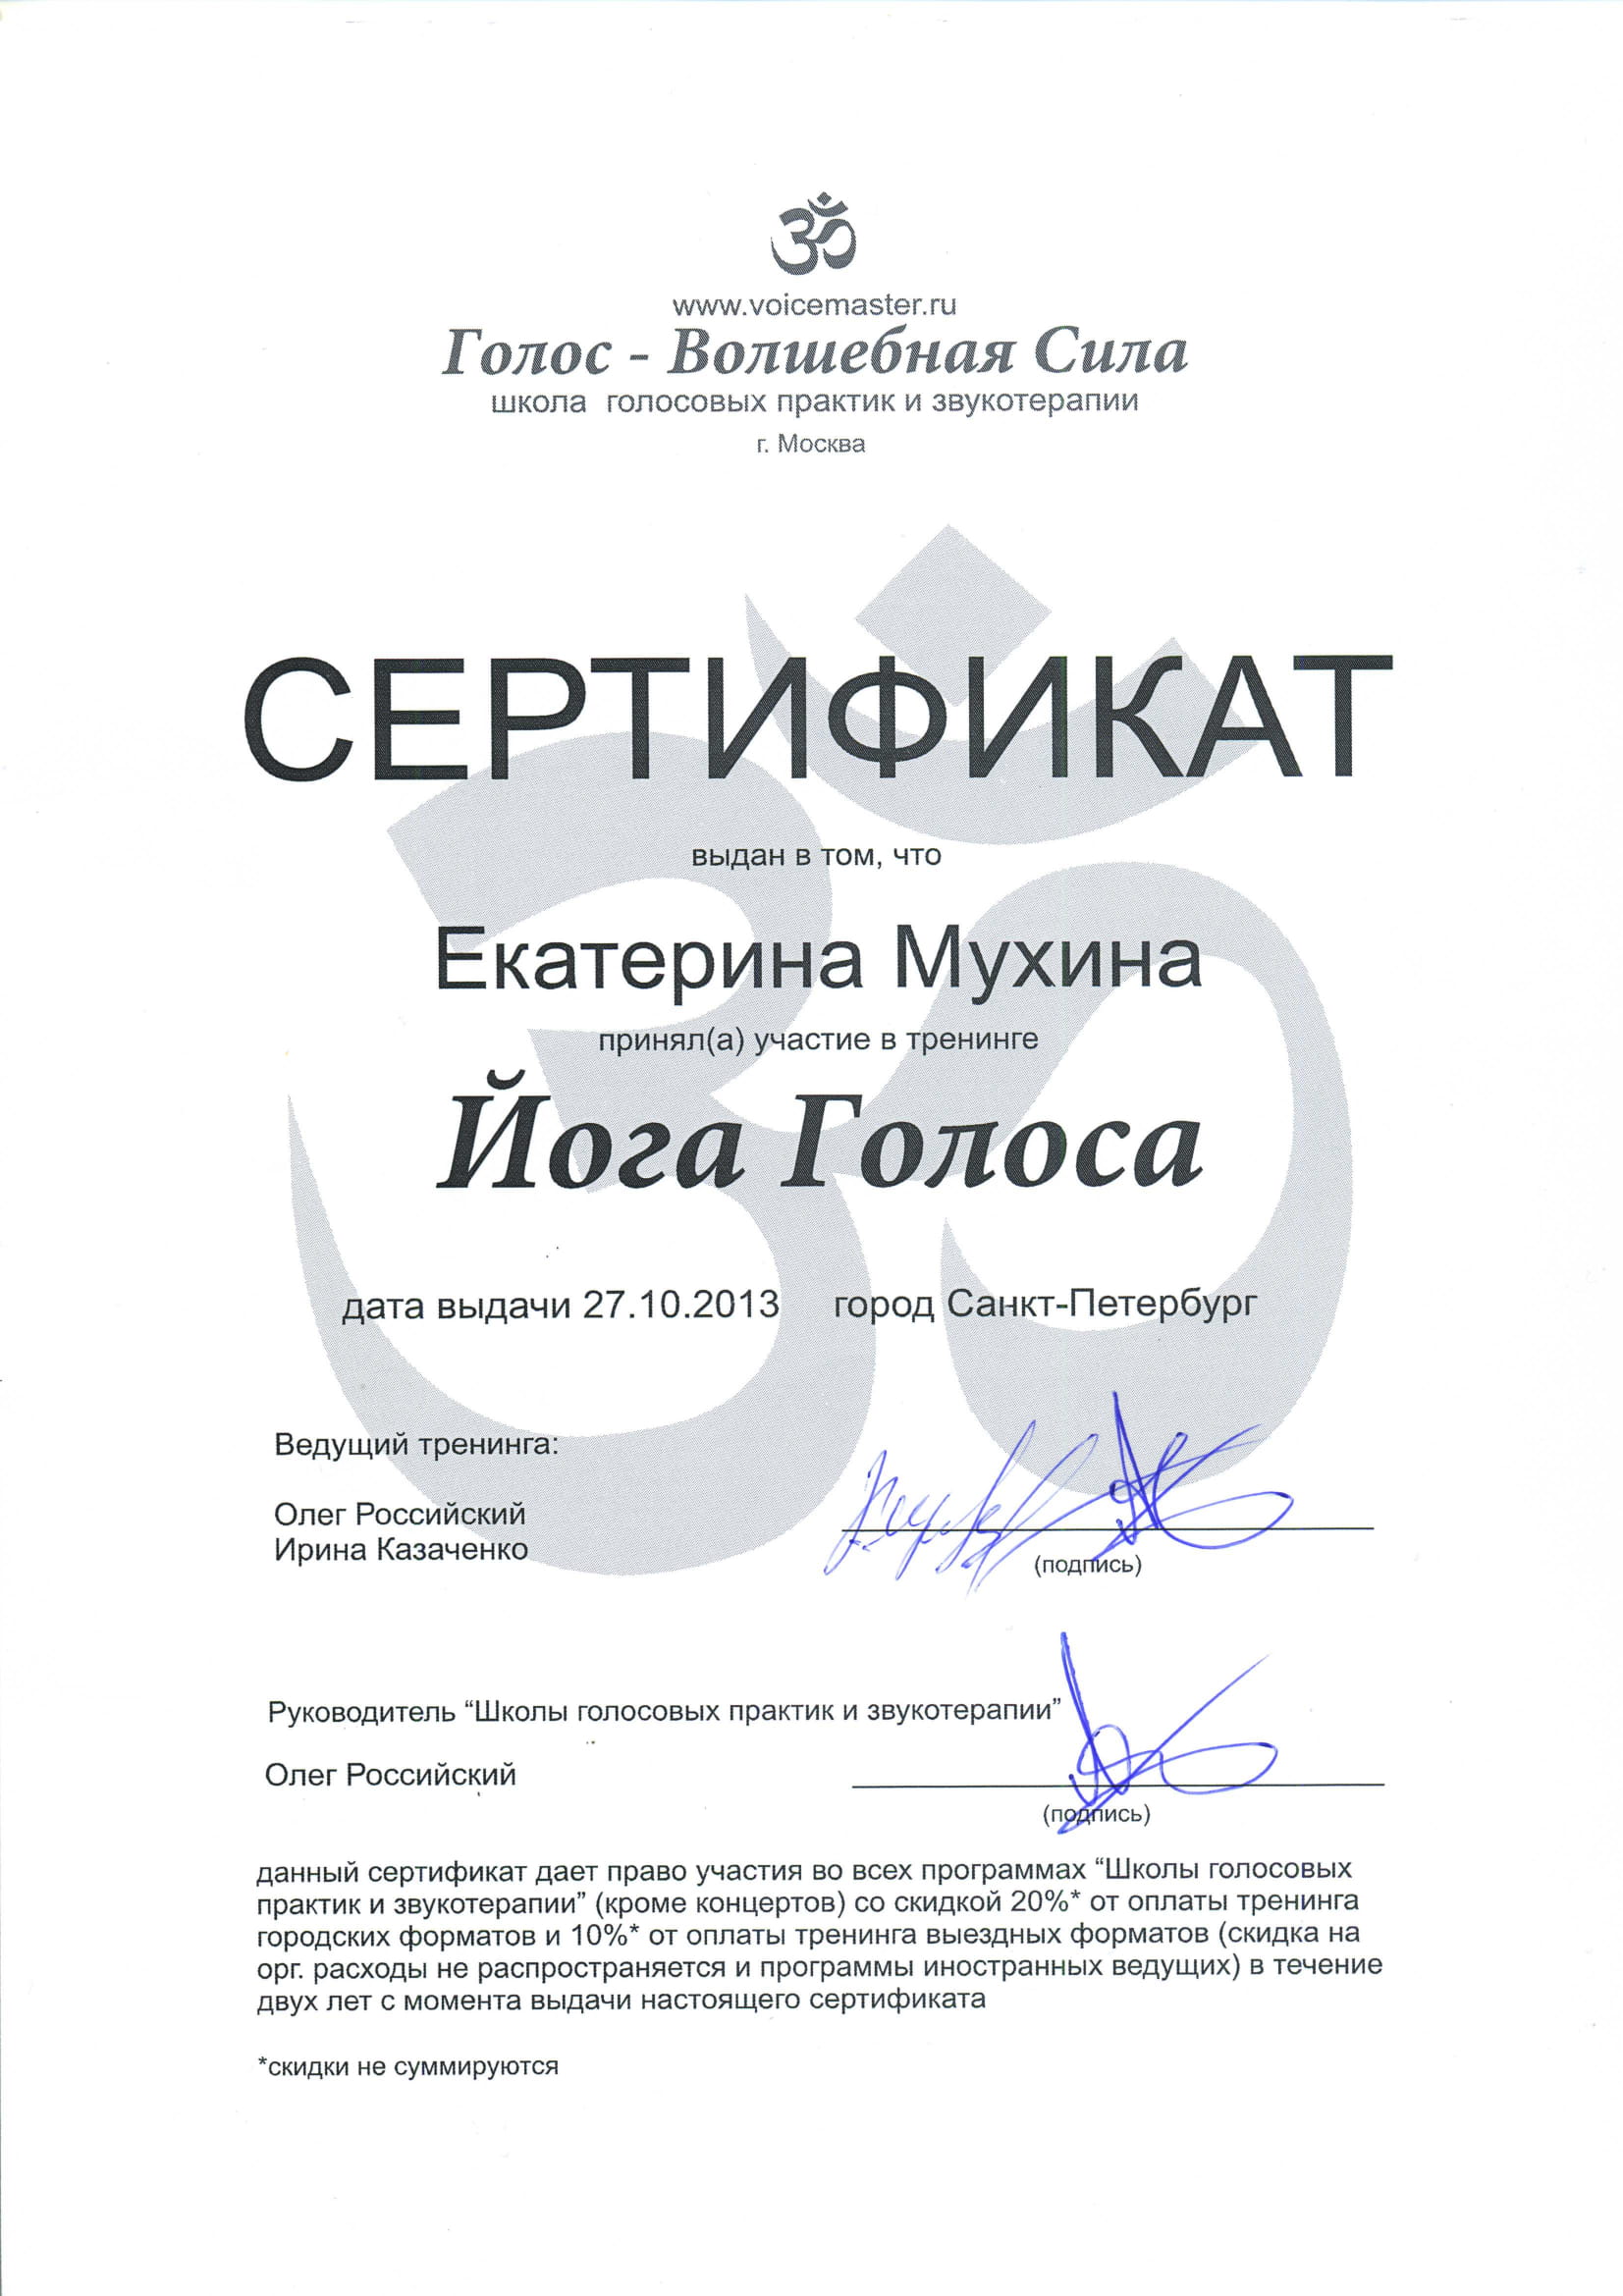 Сертификат Йога голоса